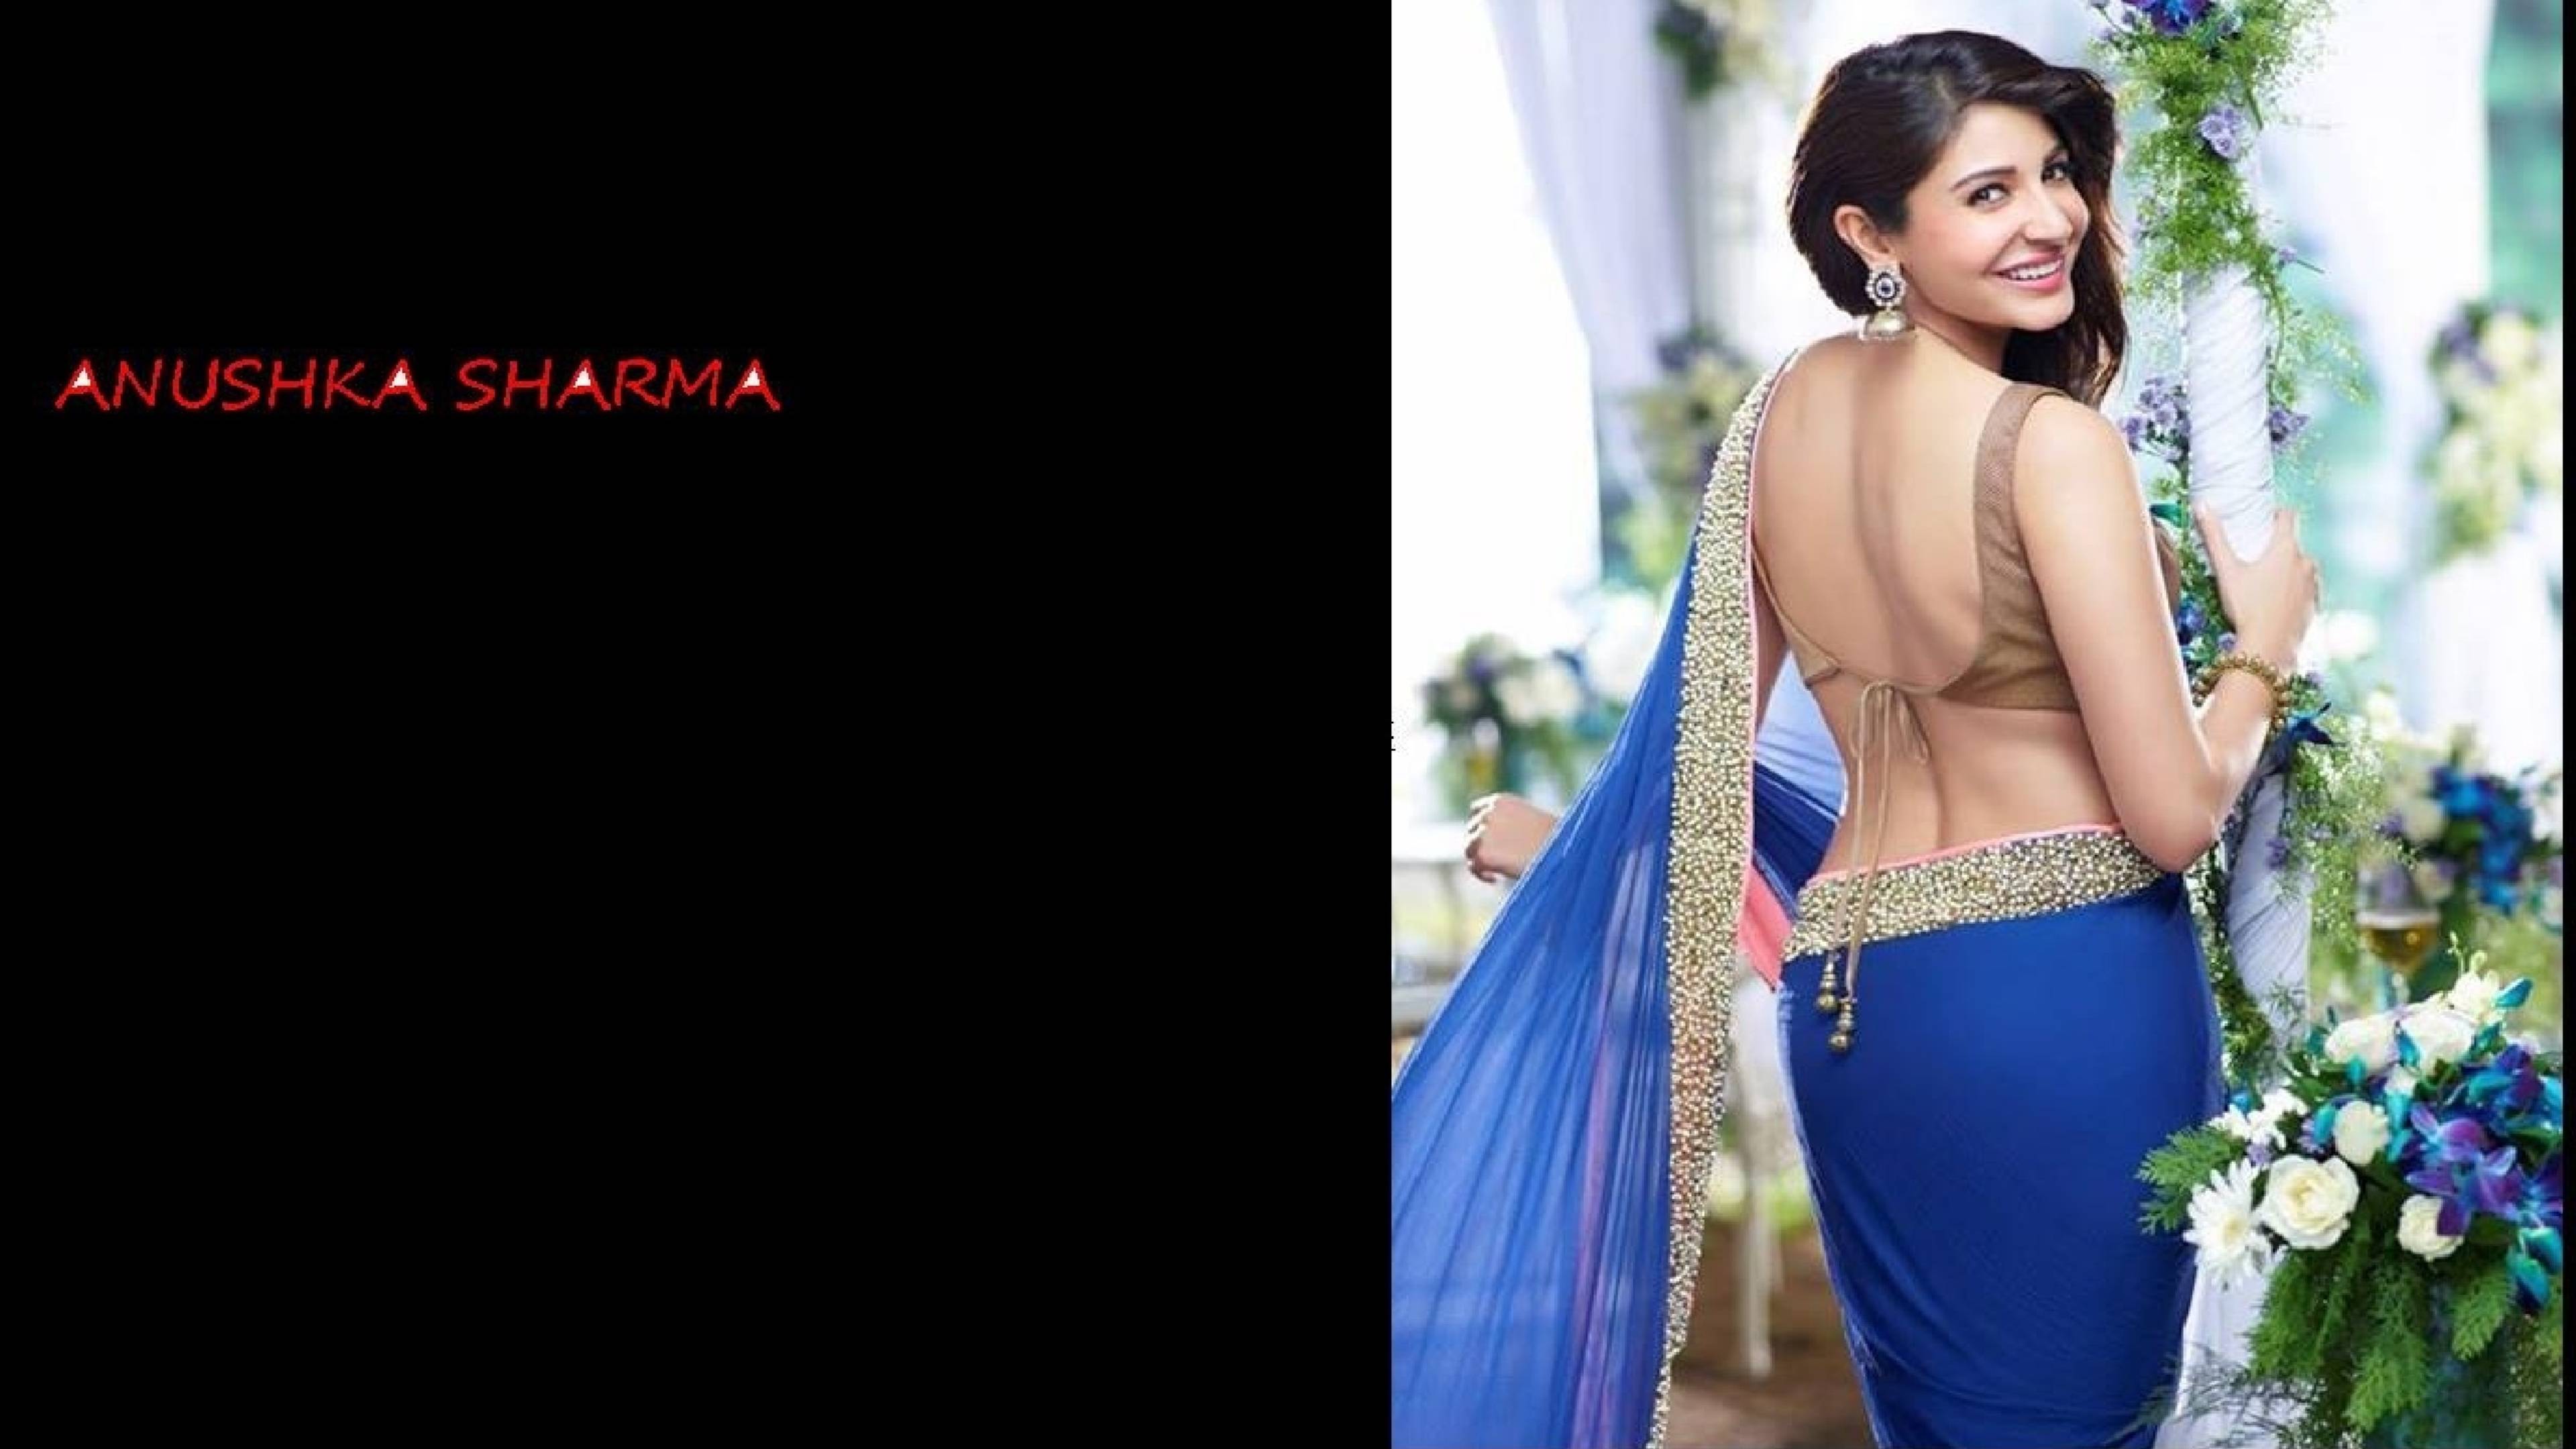 Beautiful Hot Indian Actress 4K HD Wallpapers 10 Free High resolution